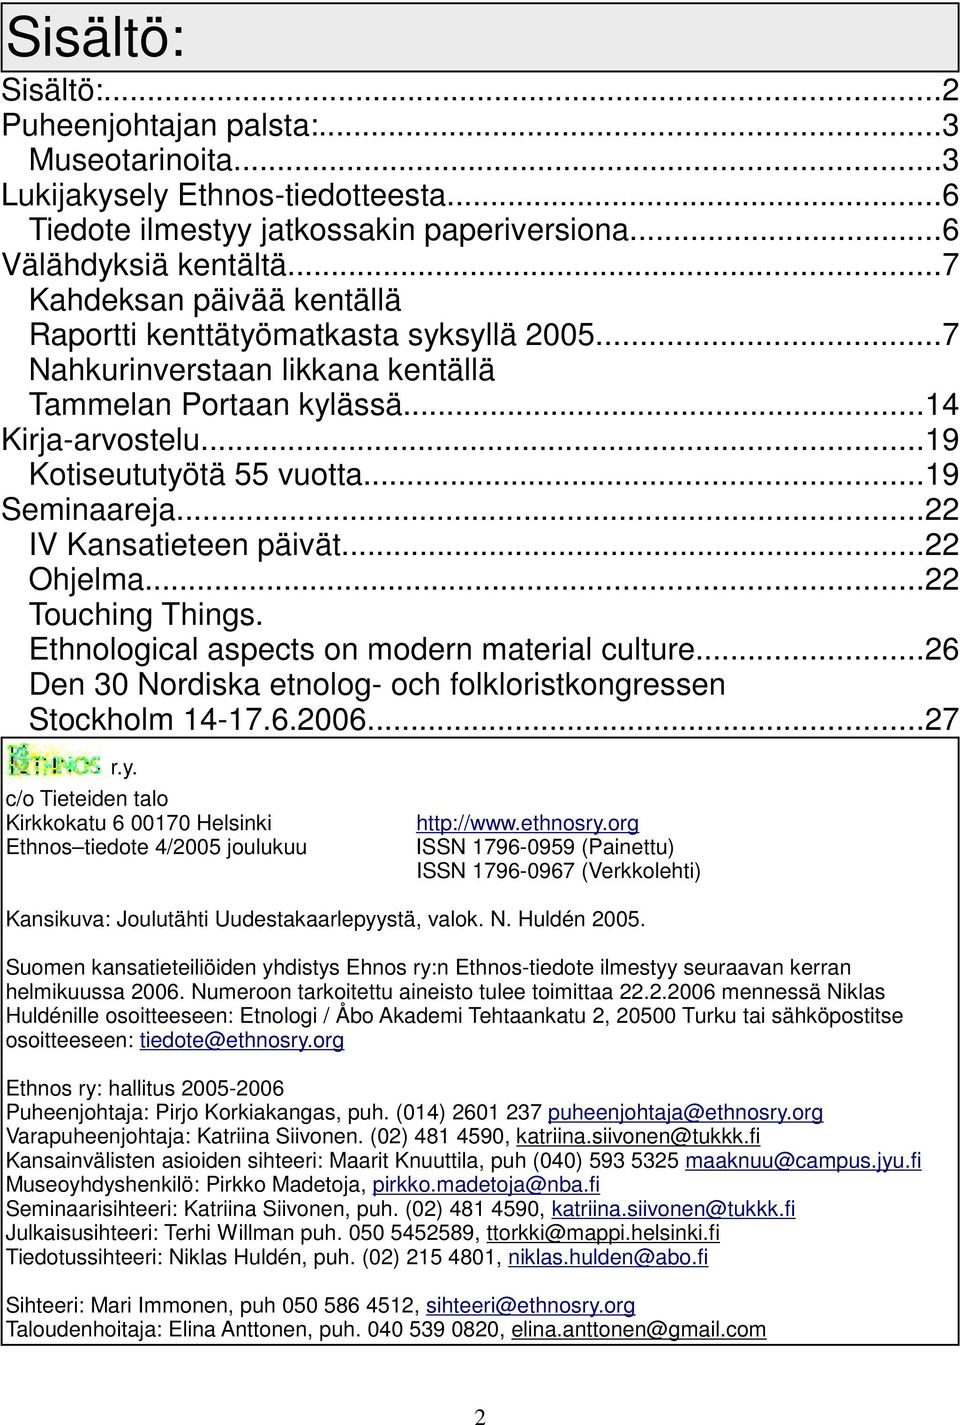 ..22 IV Kansatieteen päivät...22 Ohjelma...22 Touching Things. Ethnological aspects on modern material culture...26 Den 30 Nordiska etnolog- och folkloristkongressen Stockholm 14-17.6.2006...27 r.y.